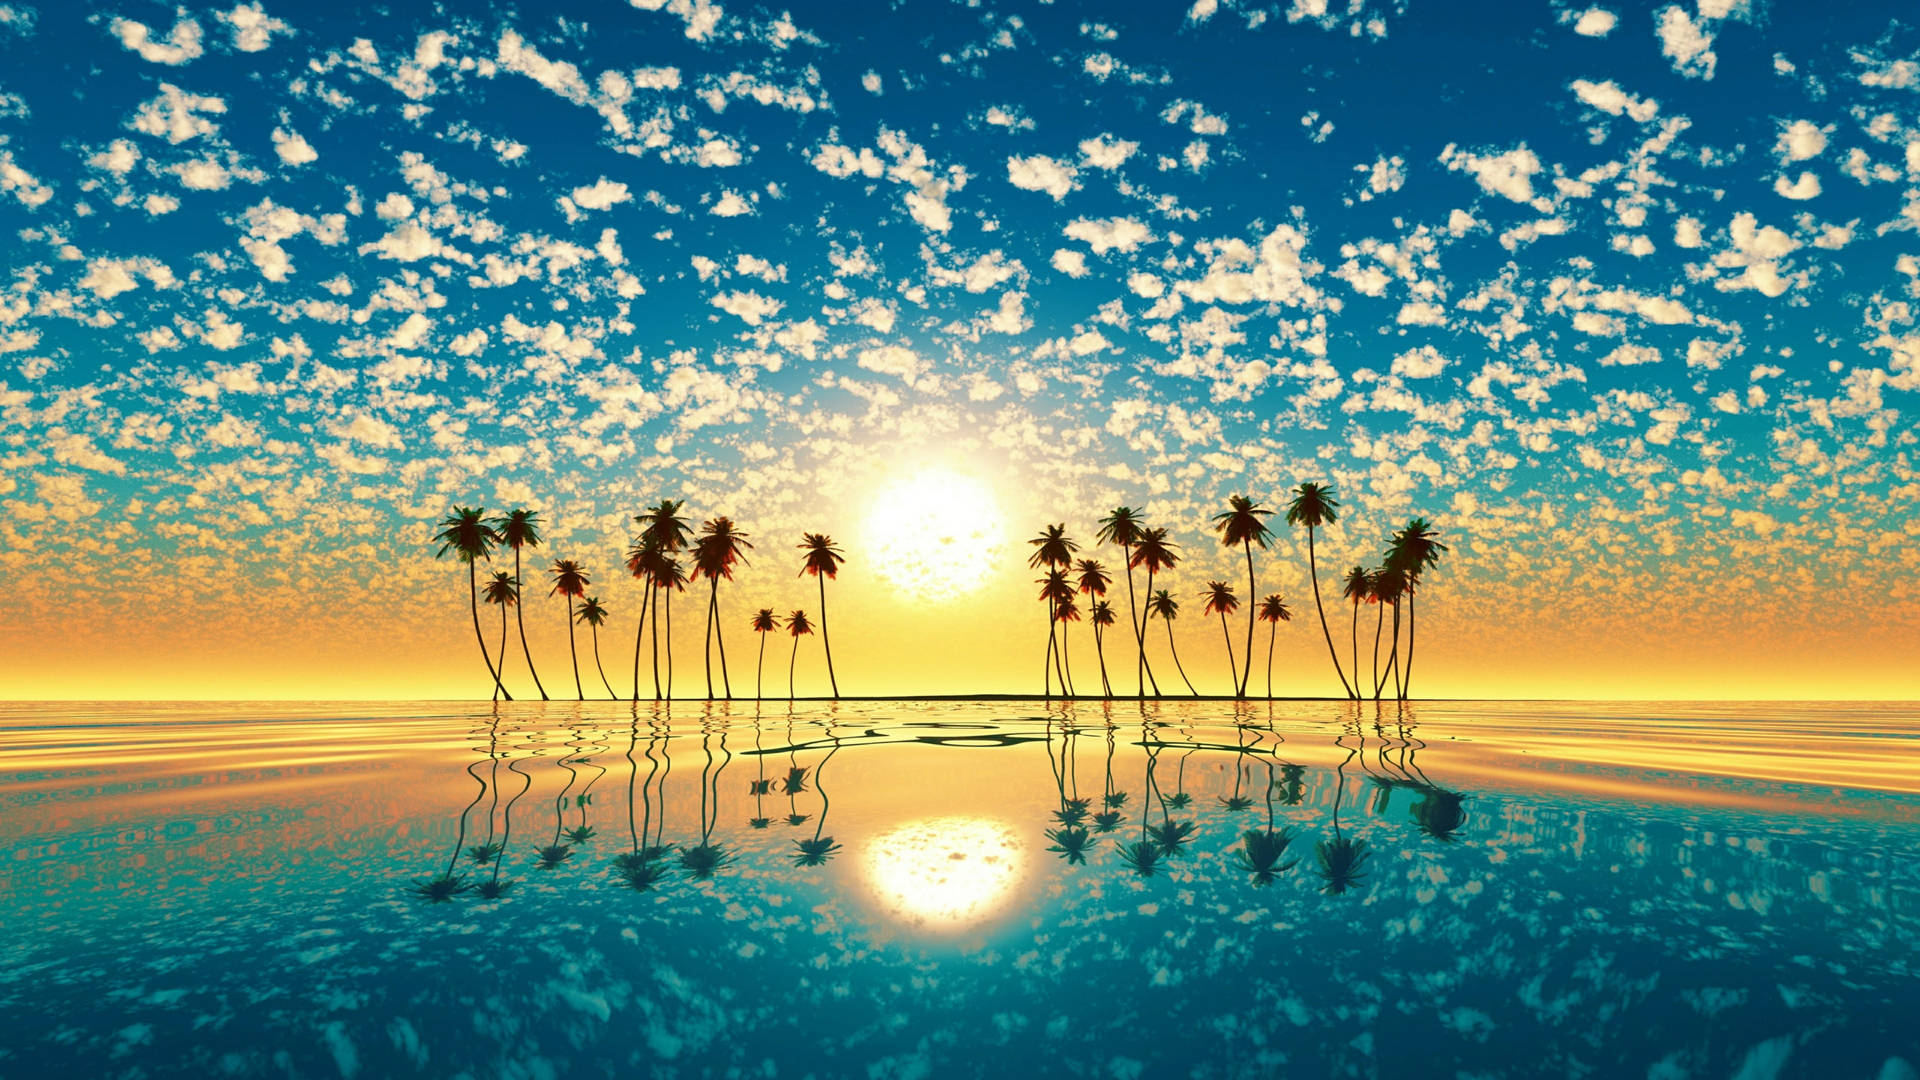 Palm Trees Reflection Full 4k Background